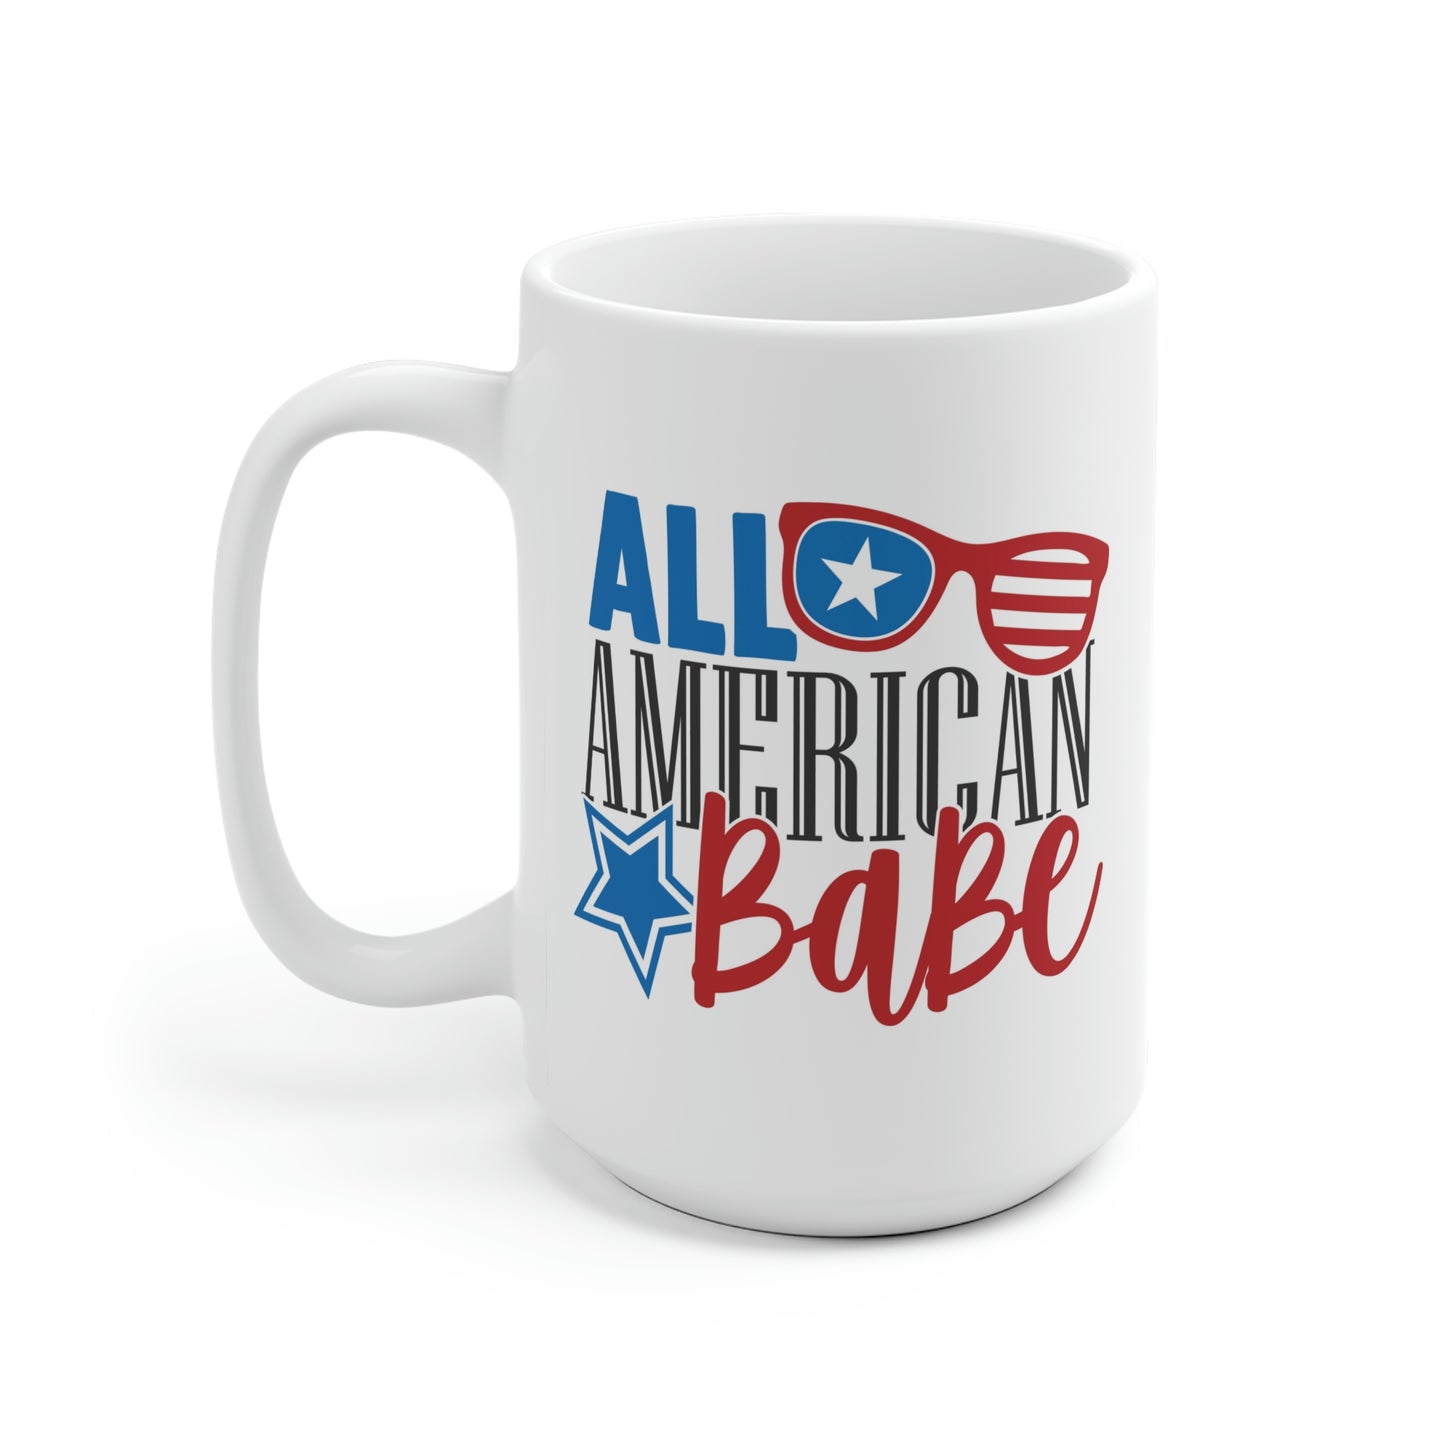 All American Babe Mug